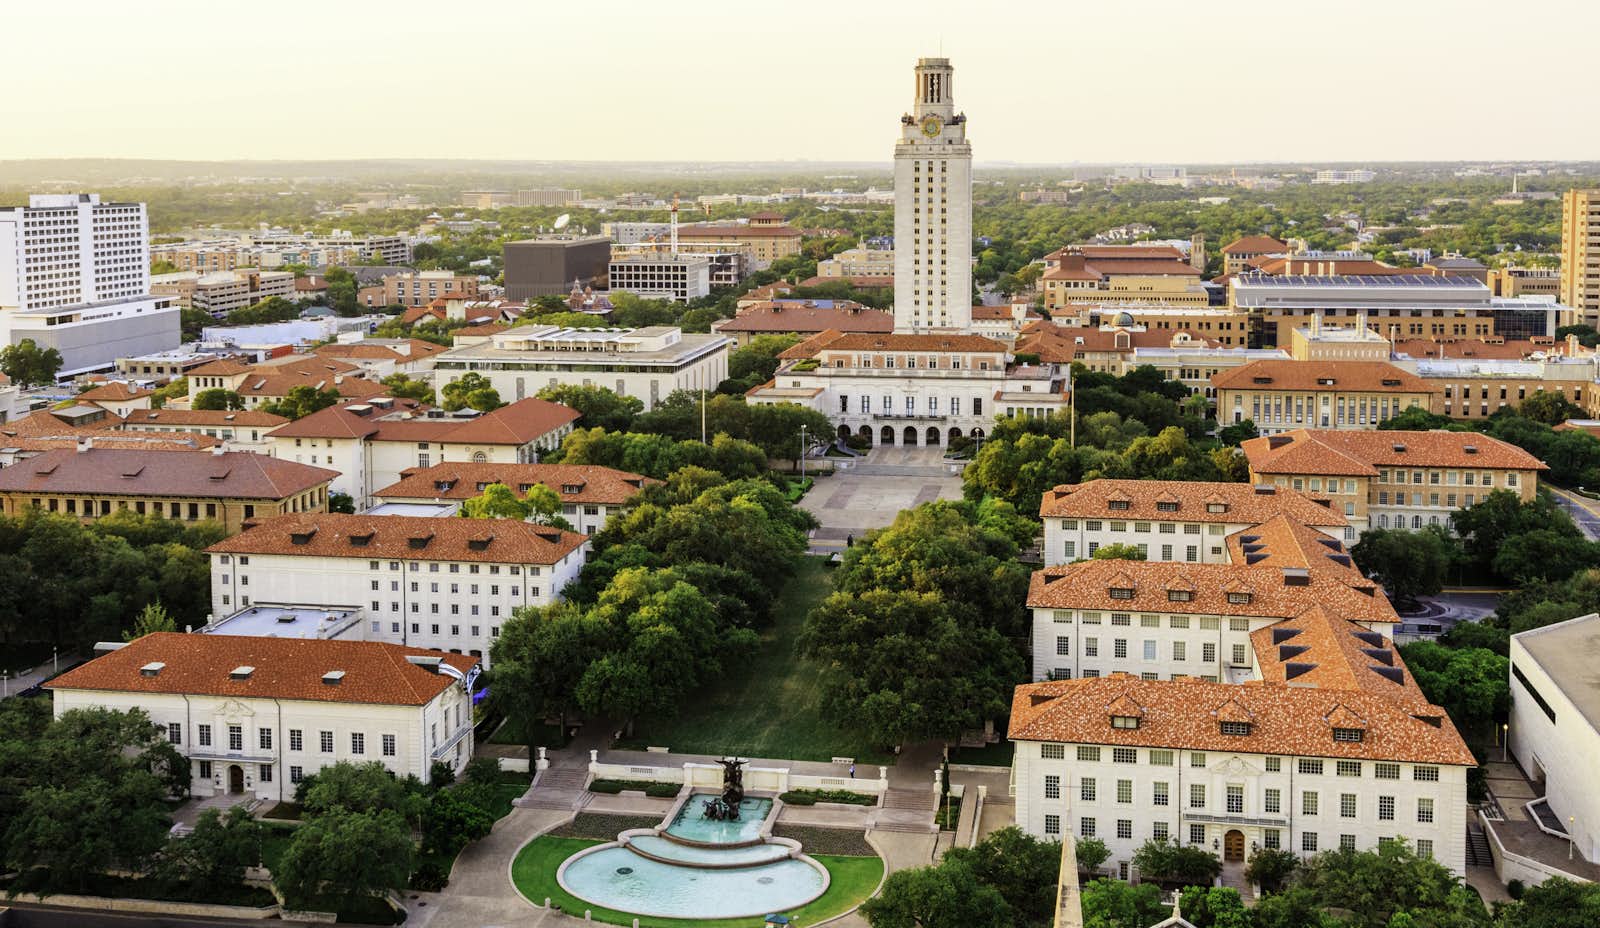  University of Texas Austin campus